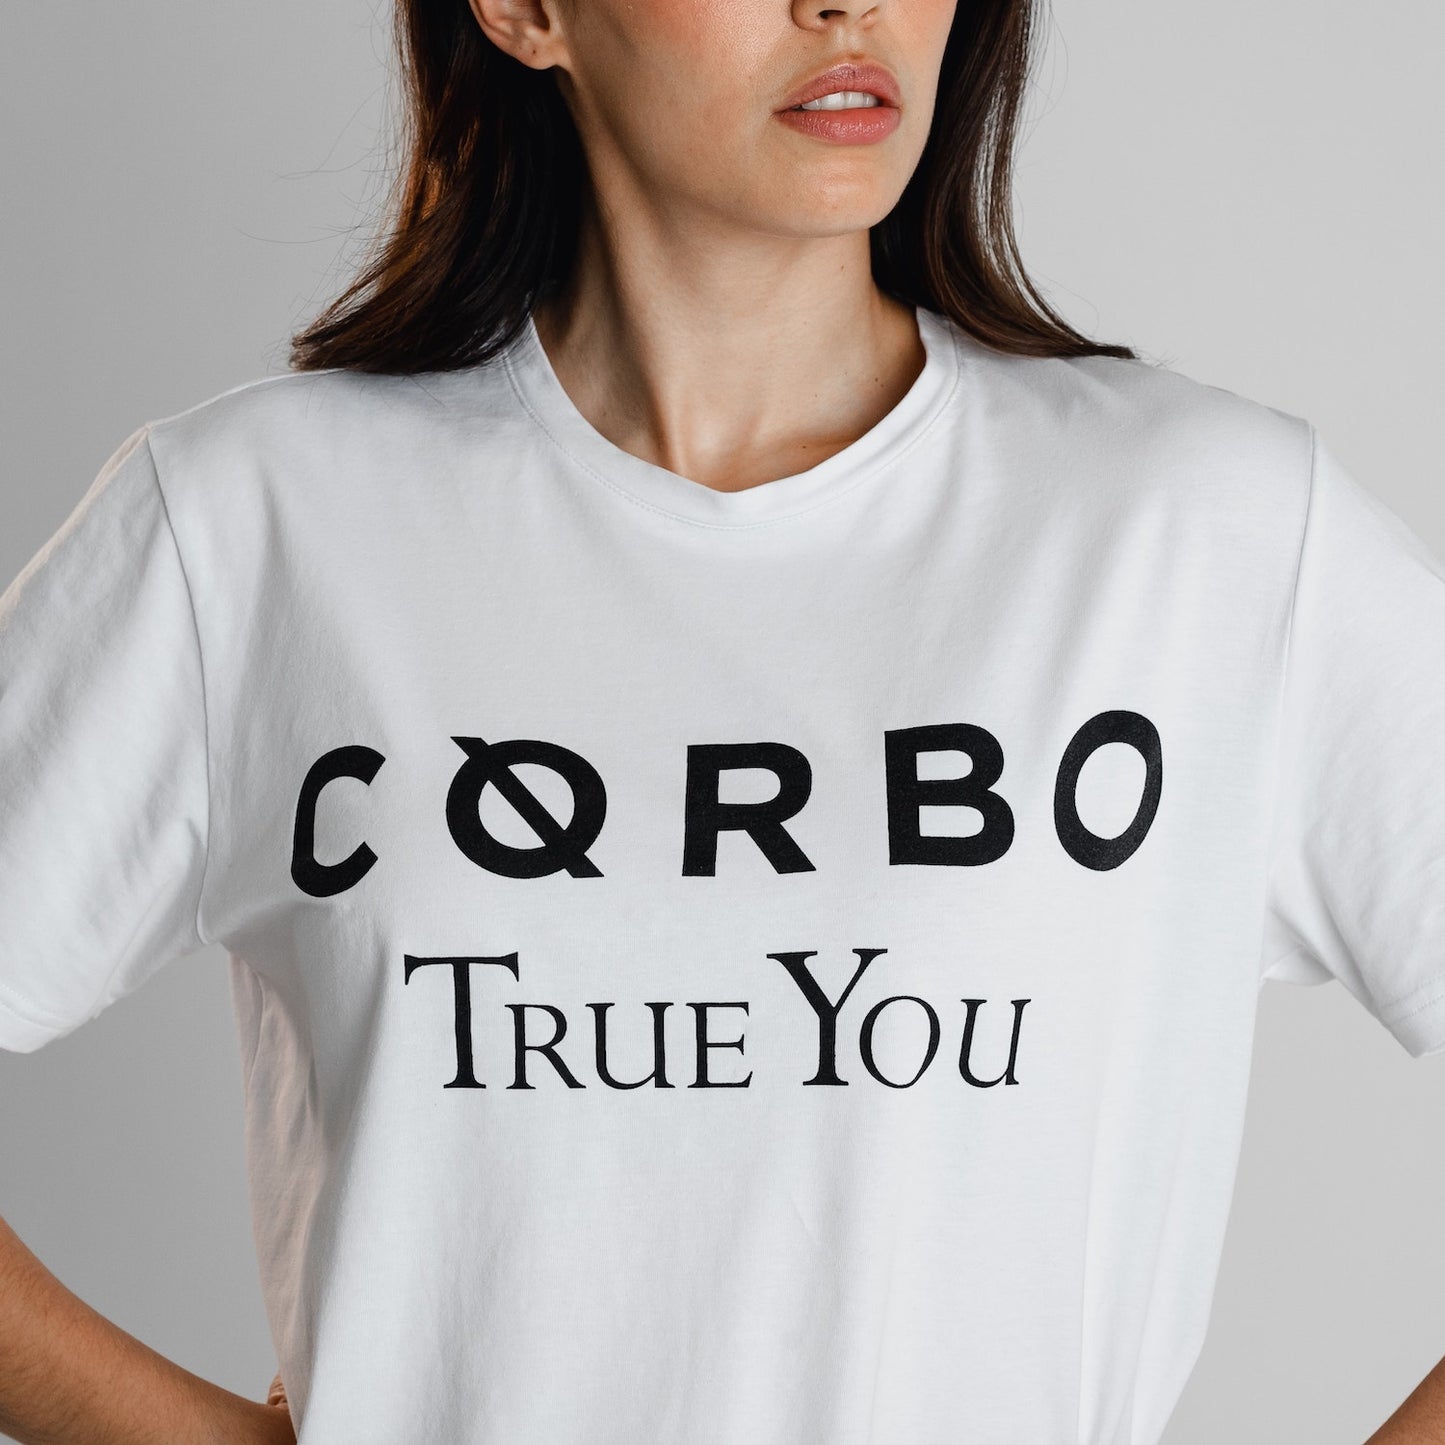 CORBO x True You Mass Medication